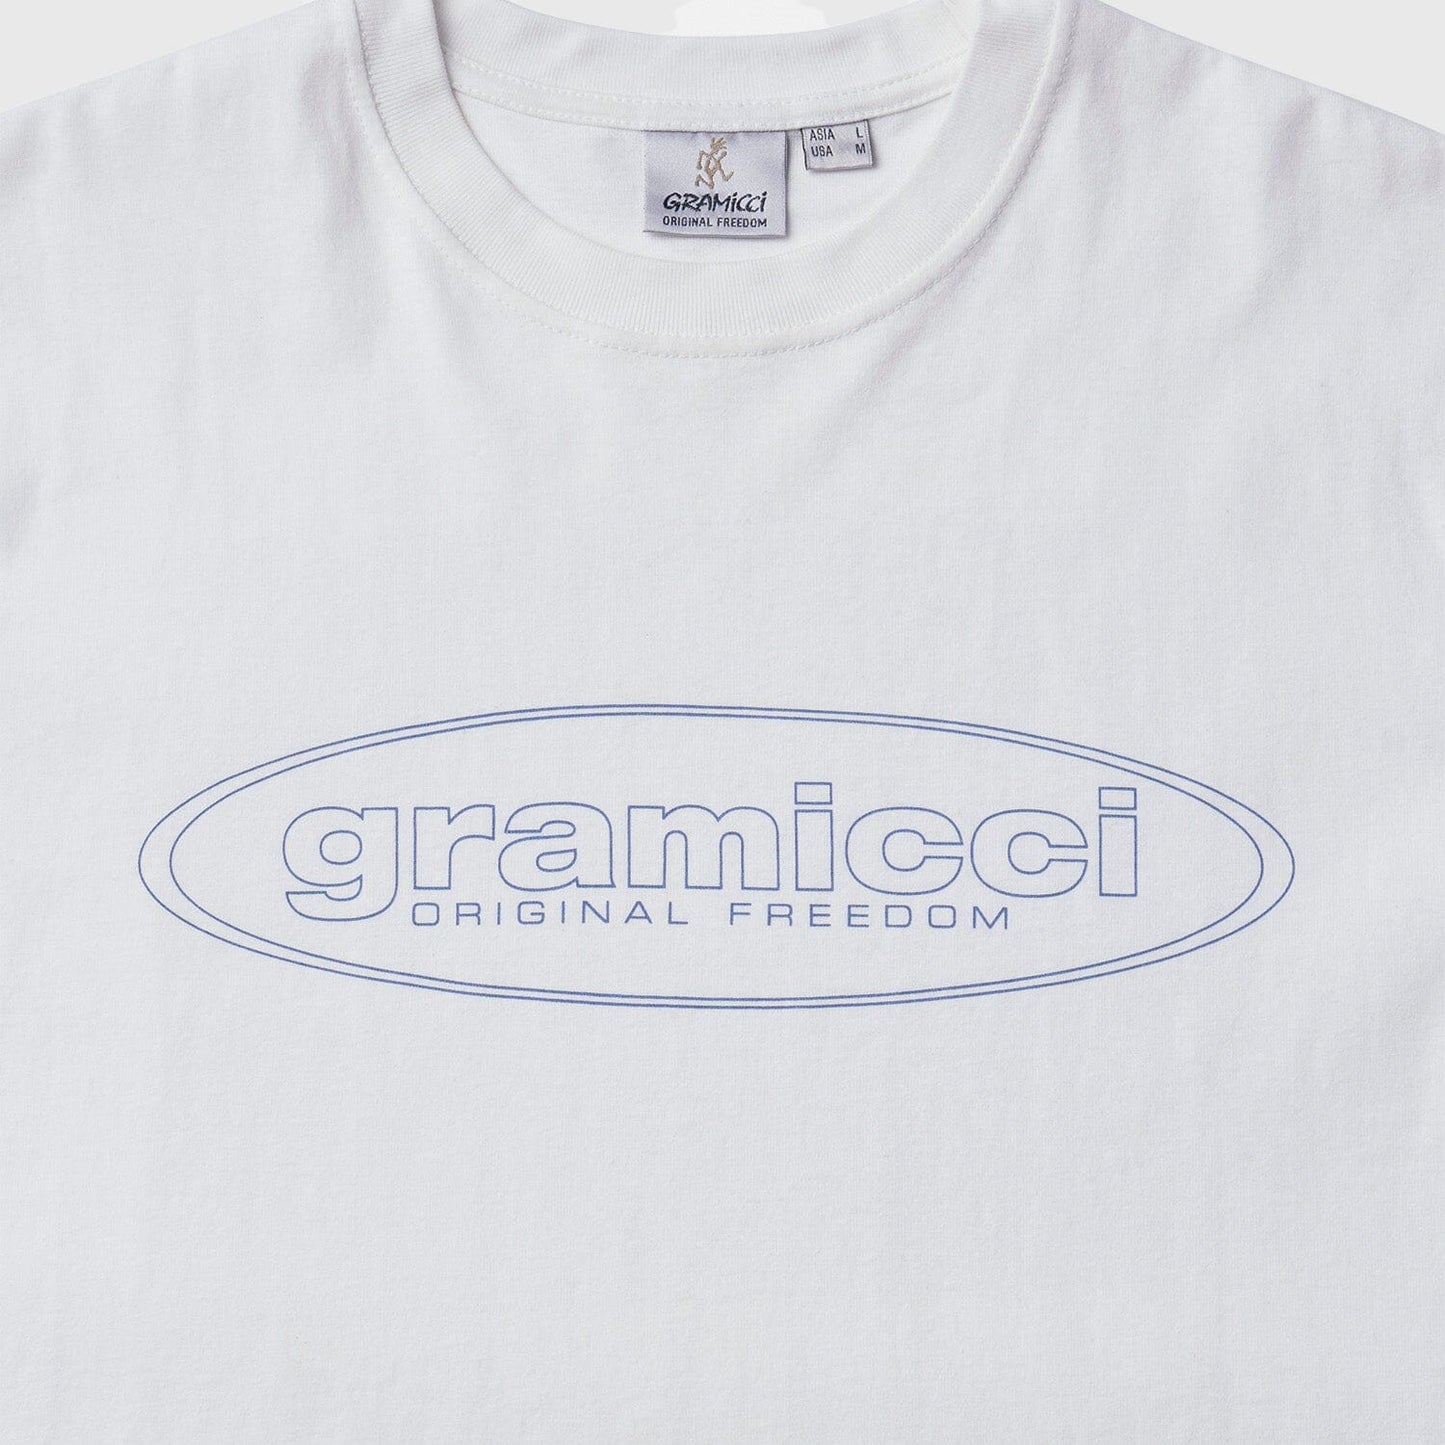 Gramicci Original Freedom Tee - White T-shirt Gramicci 